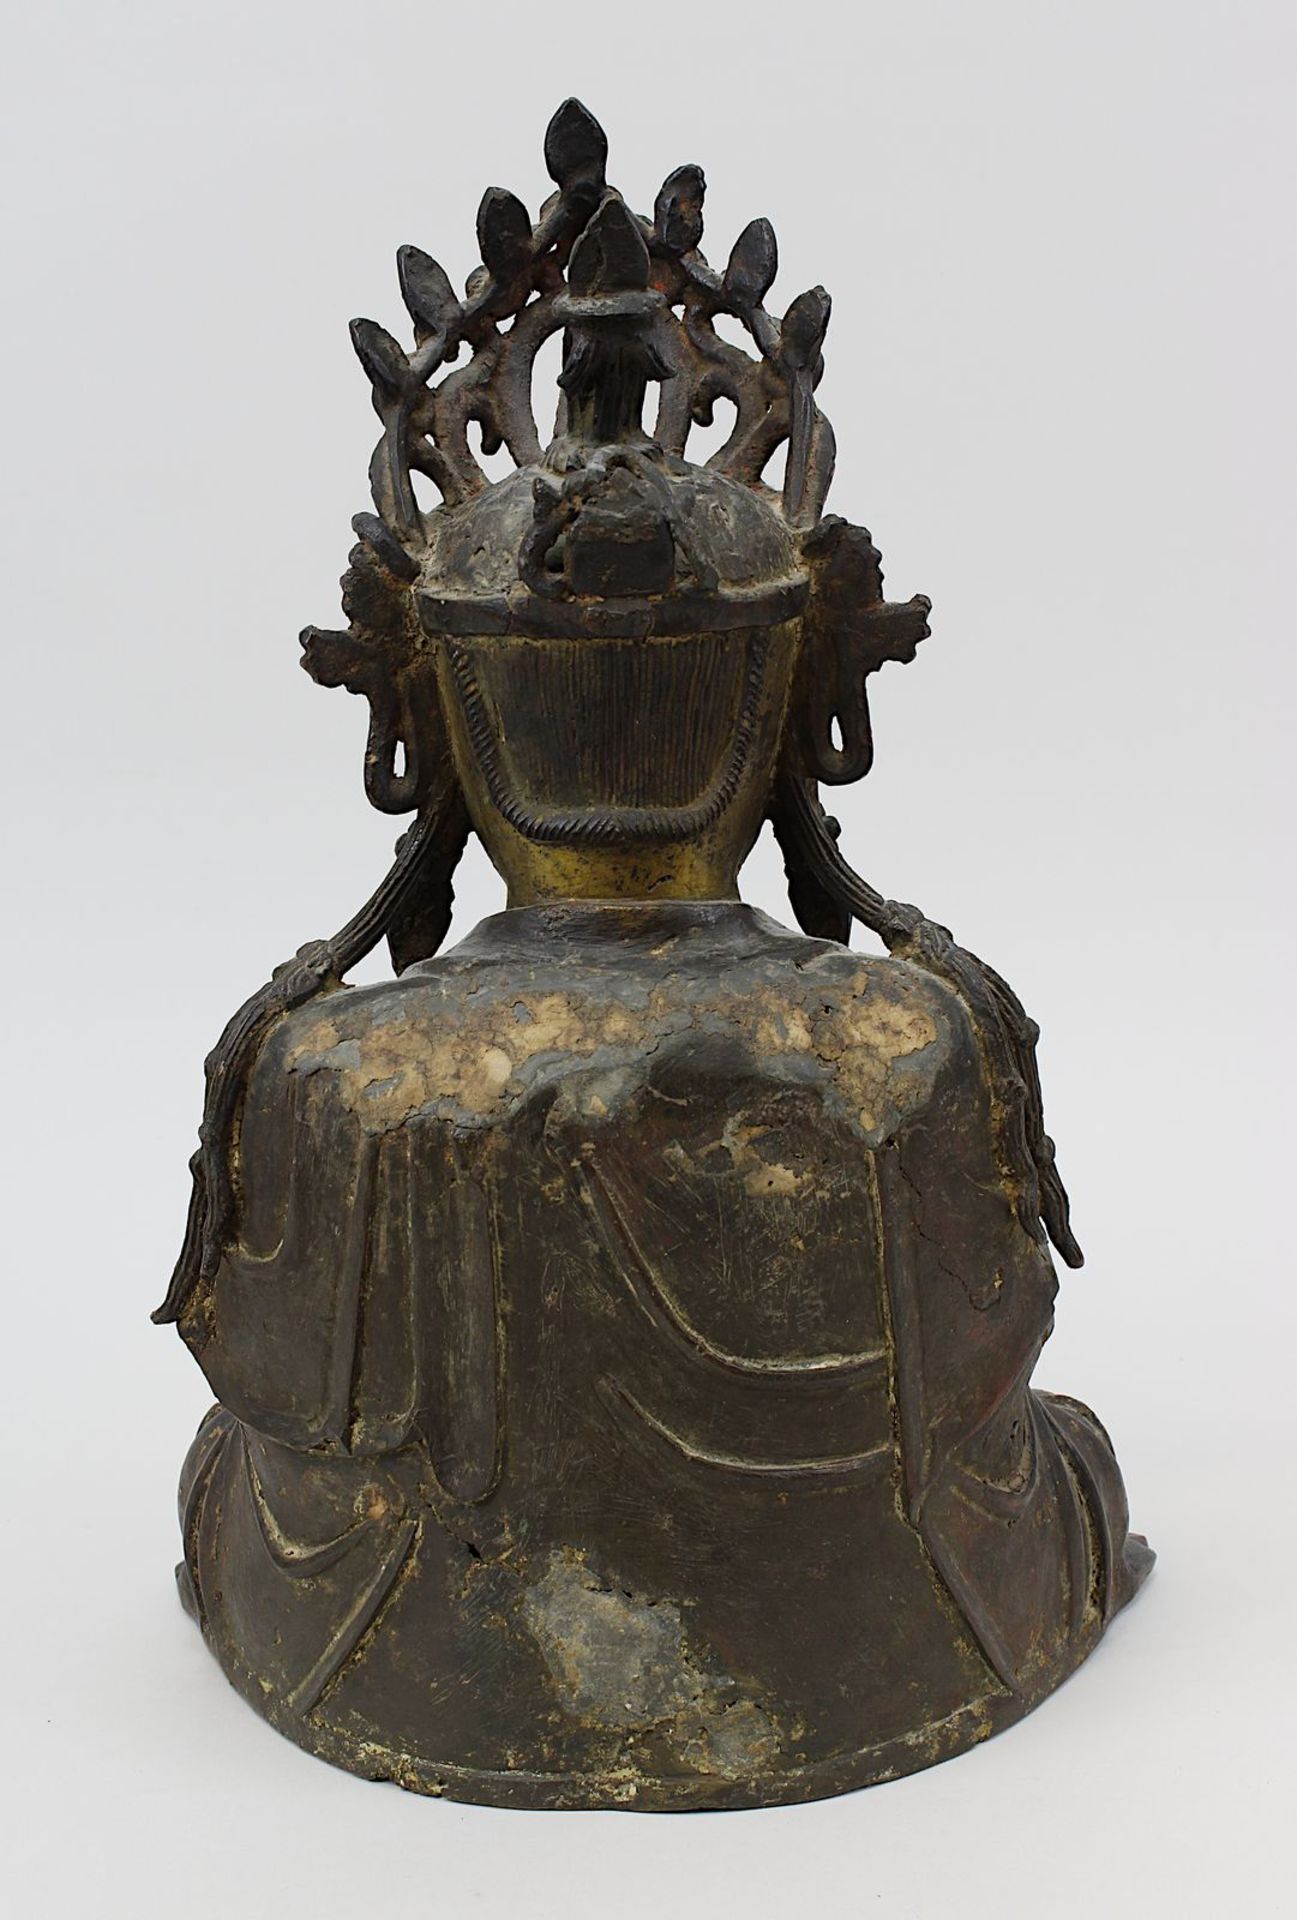 Großer Buddha aus Bronze, China 17./18. Jh., Ming-Dynastie, Guss in verlorener Form, Buddha in - Bild 3 aus 5